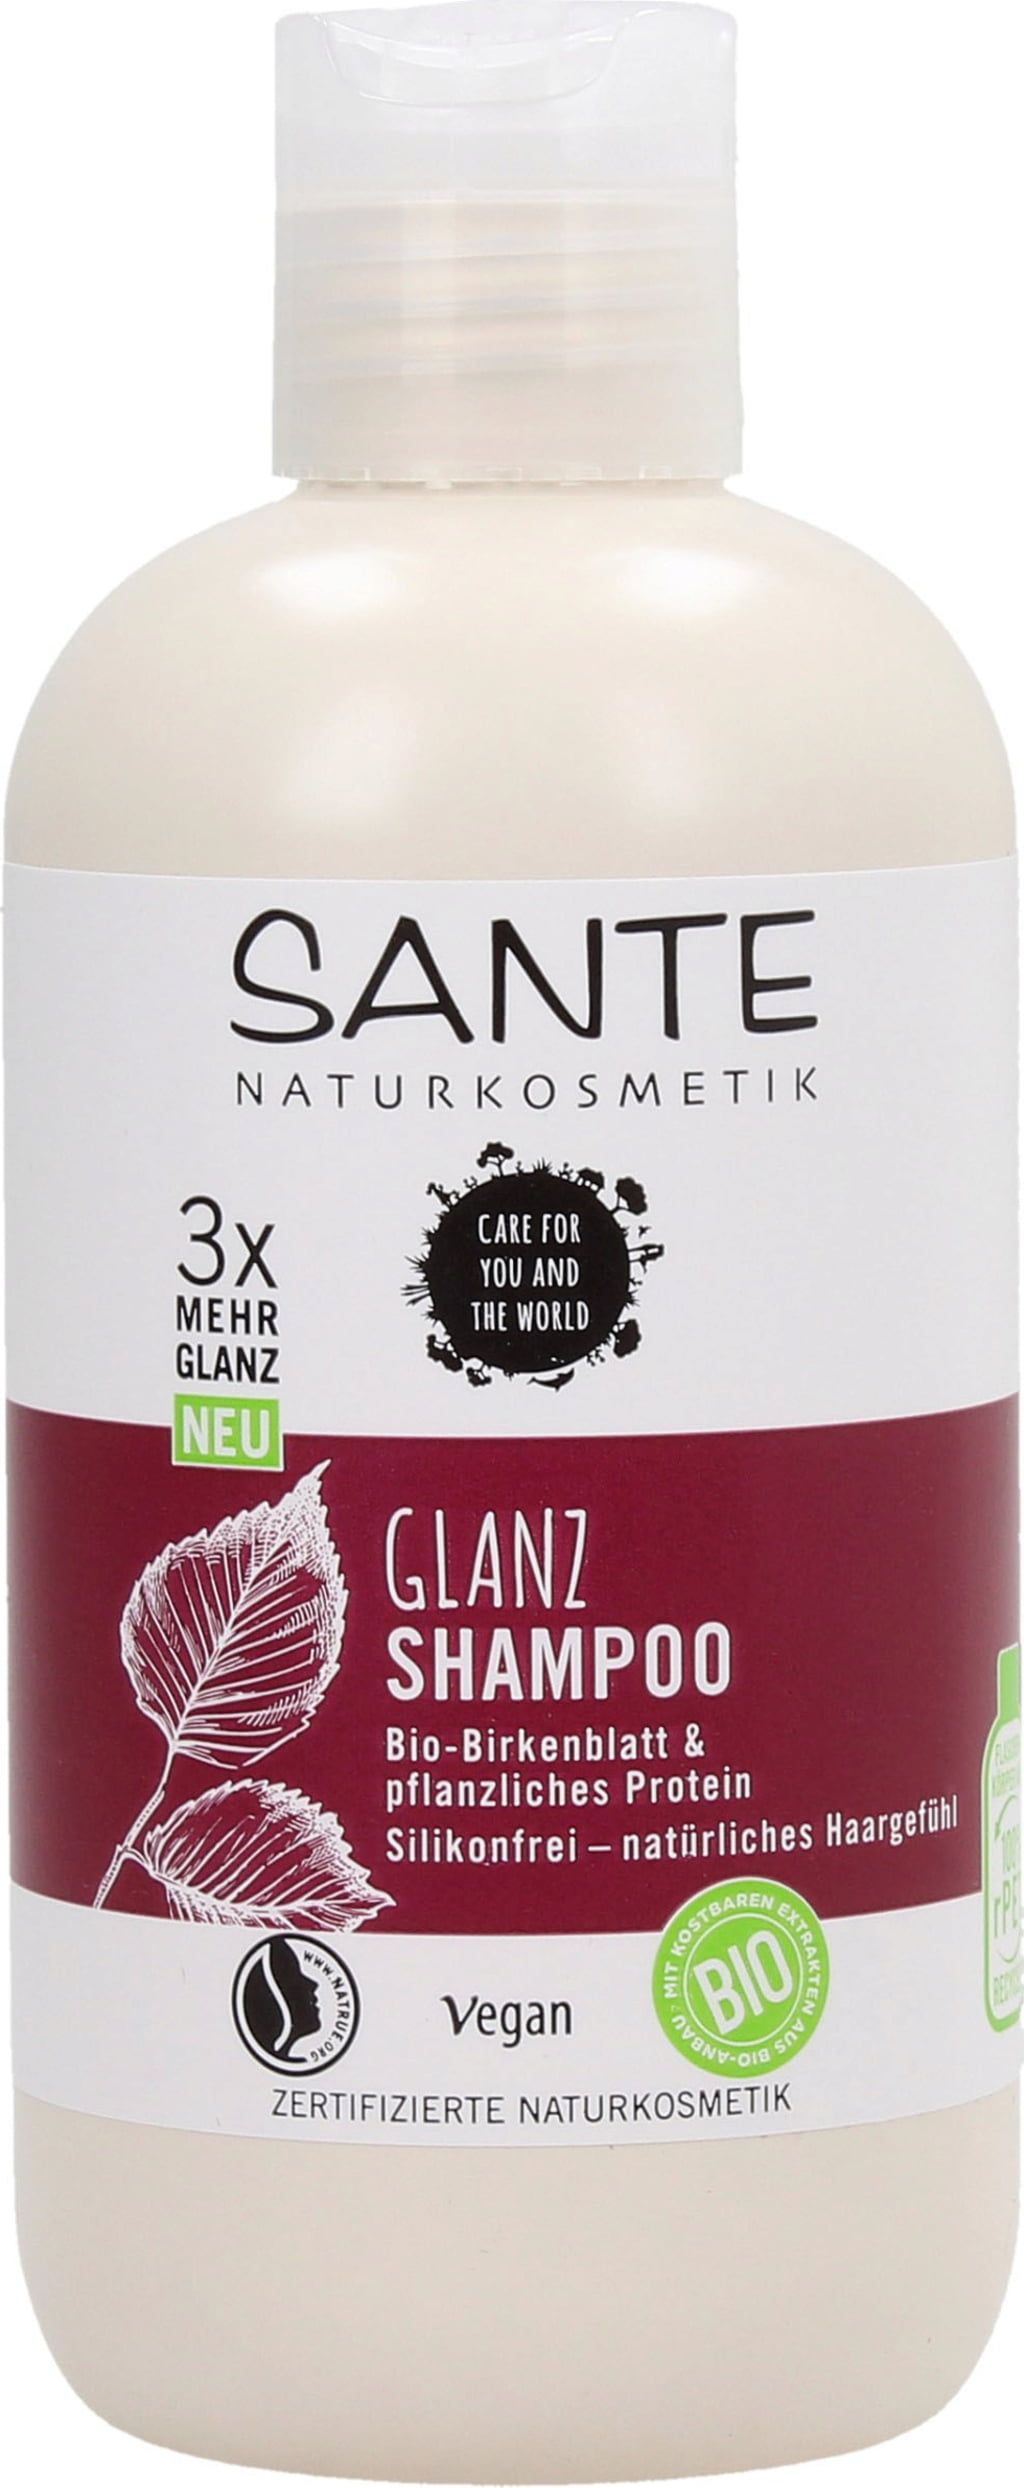 Shampoo - Black Shine with Bio Functional Corn Extract – Fresh N